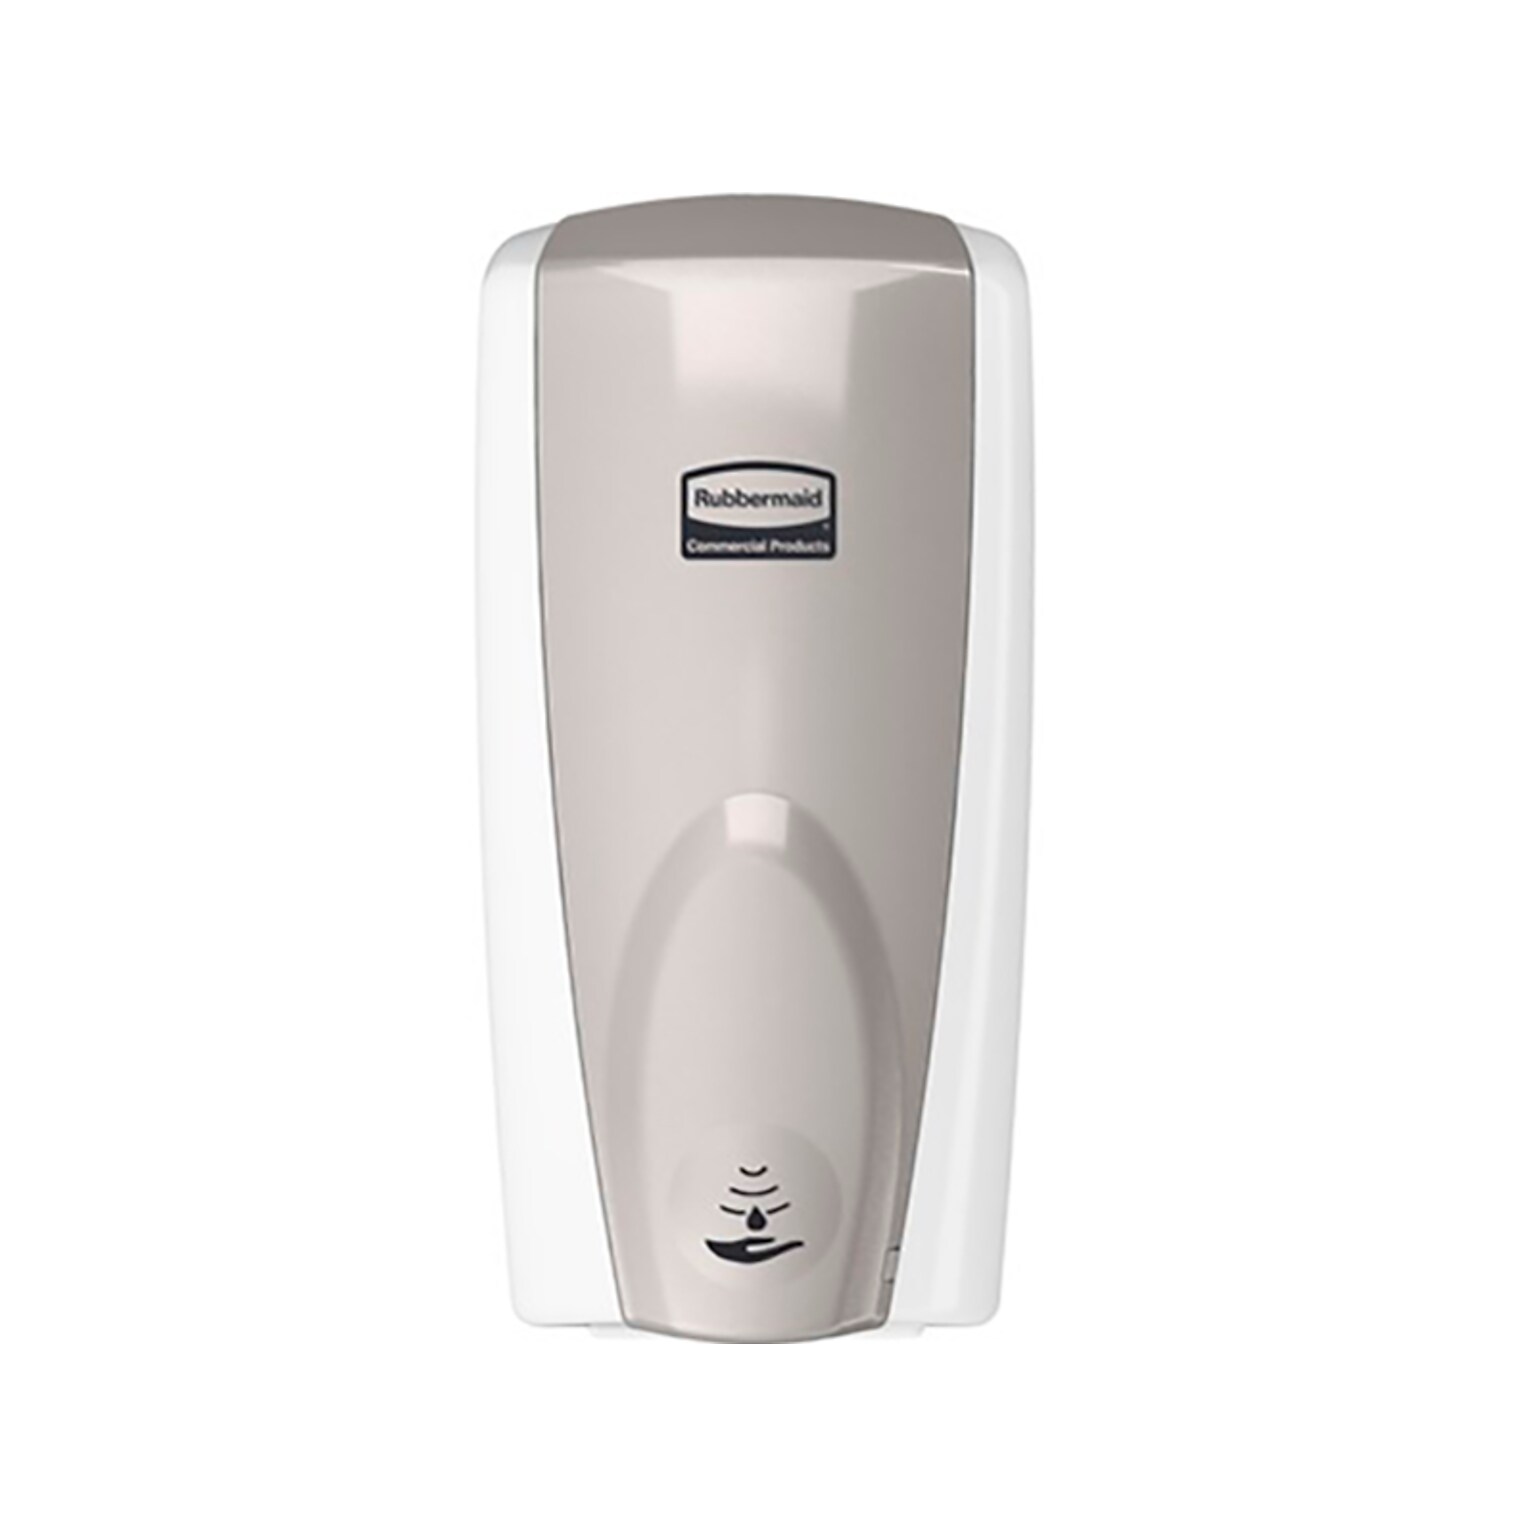 Rubbermaid AutoFoam Automatic Wall Mounted Hand Soap Dispenser, White/Gray Pearl (FG750140)